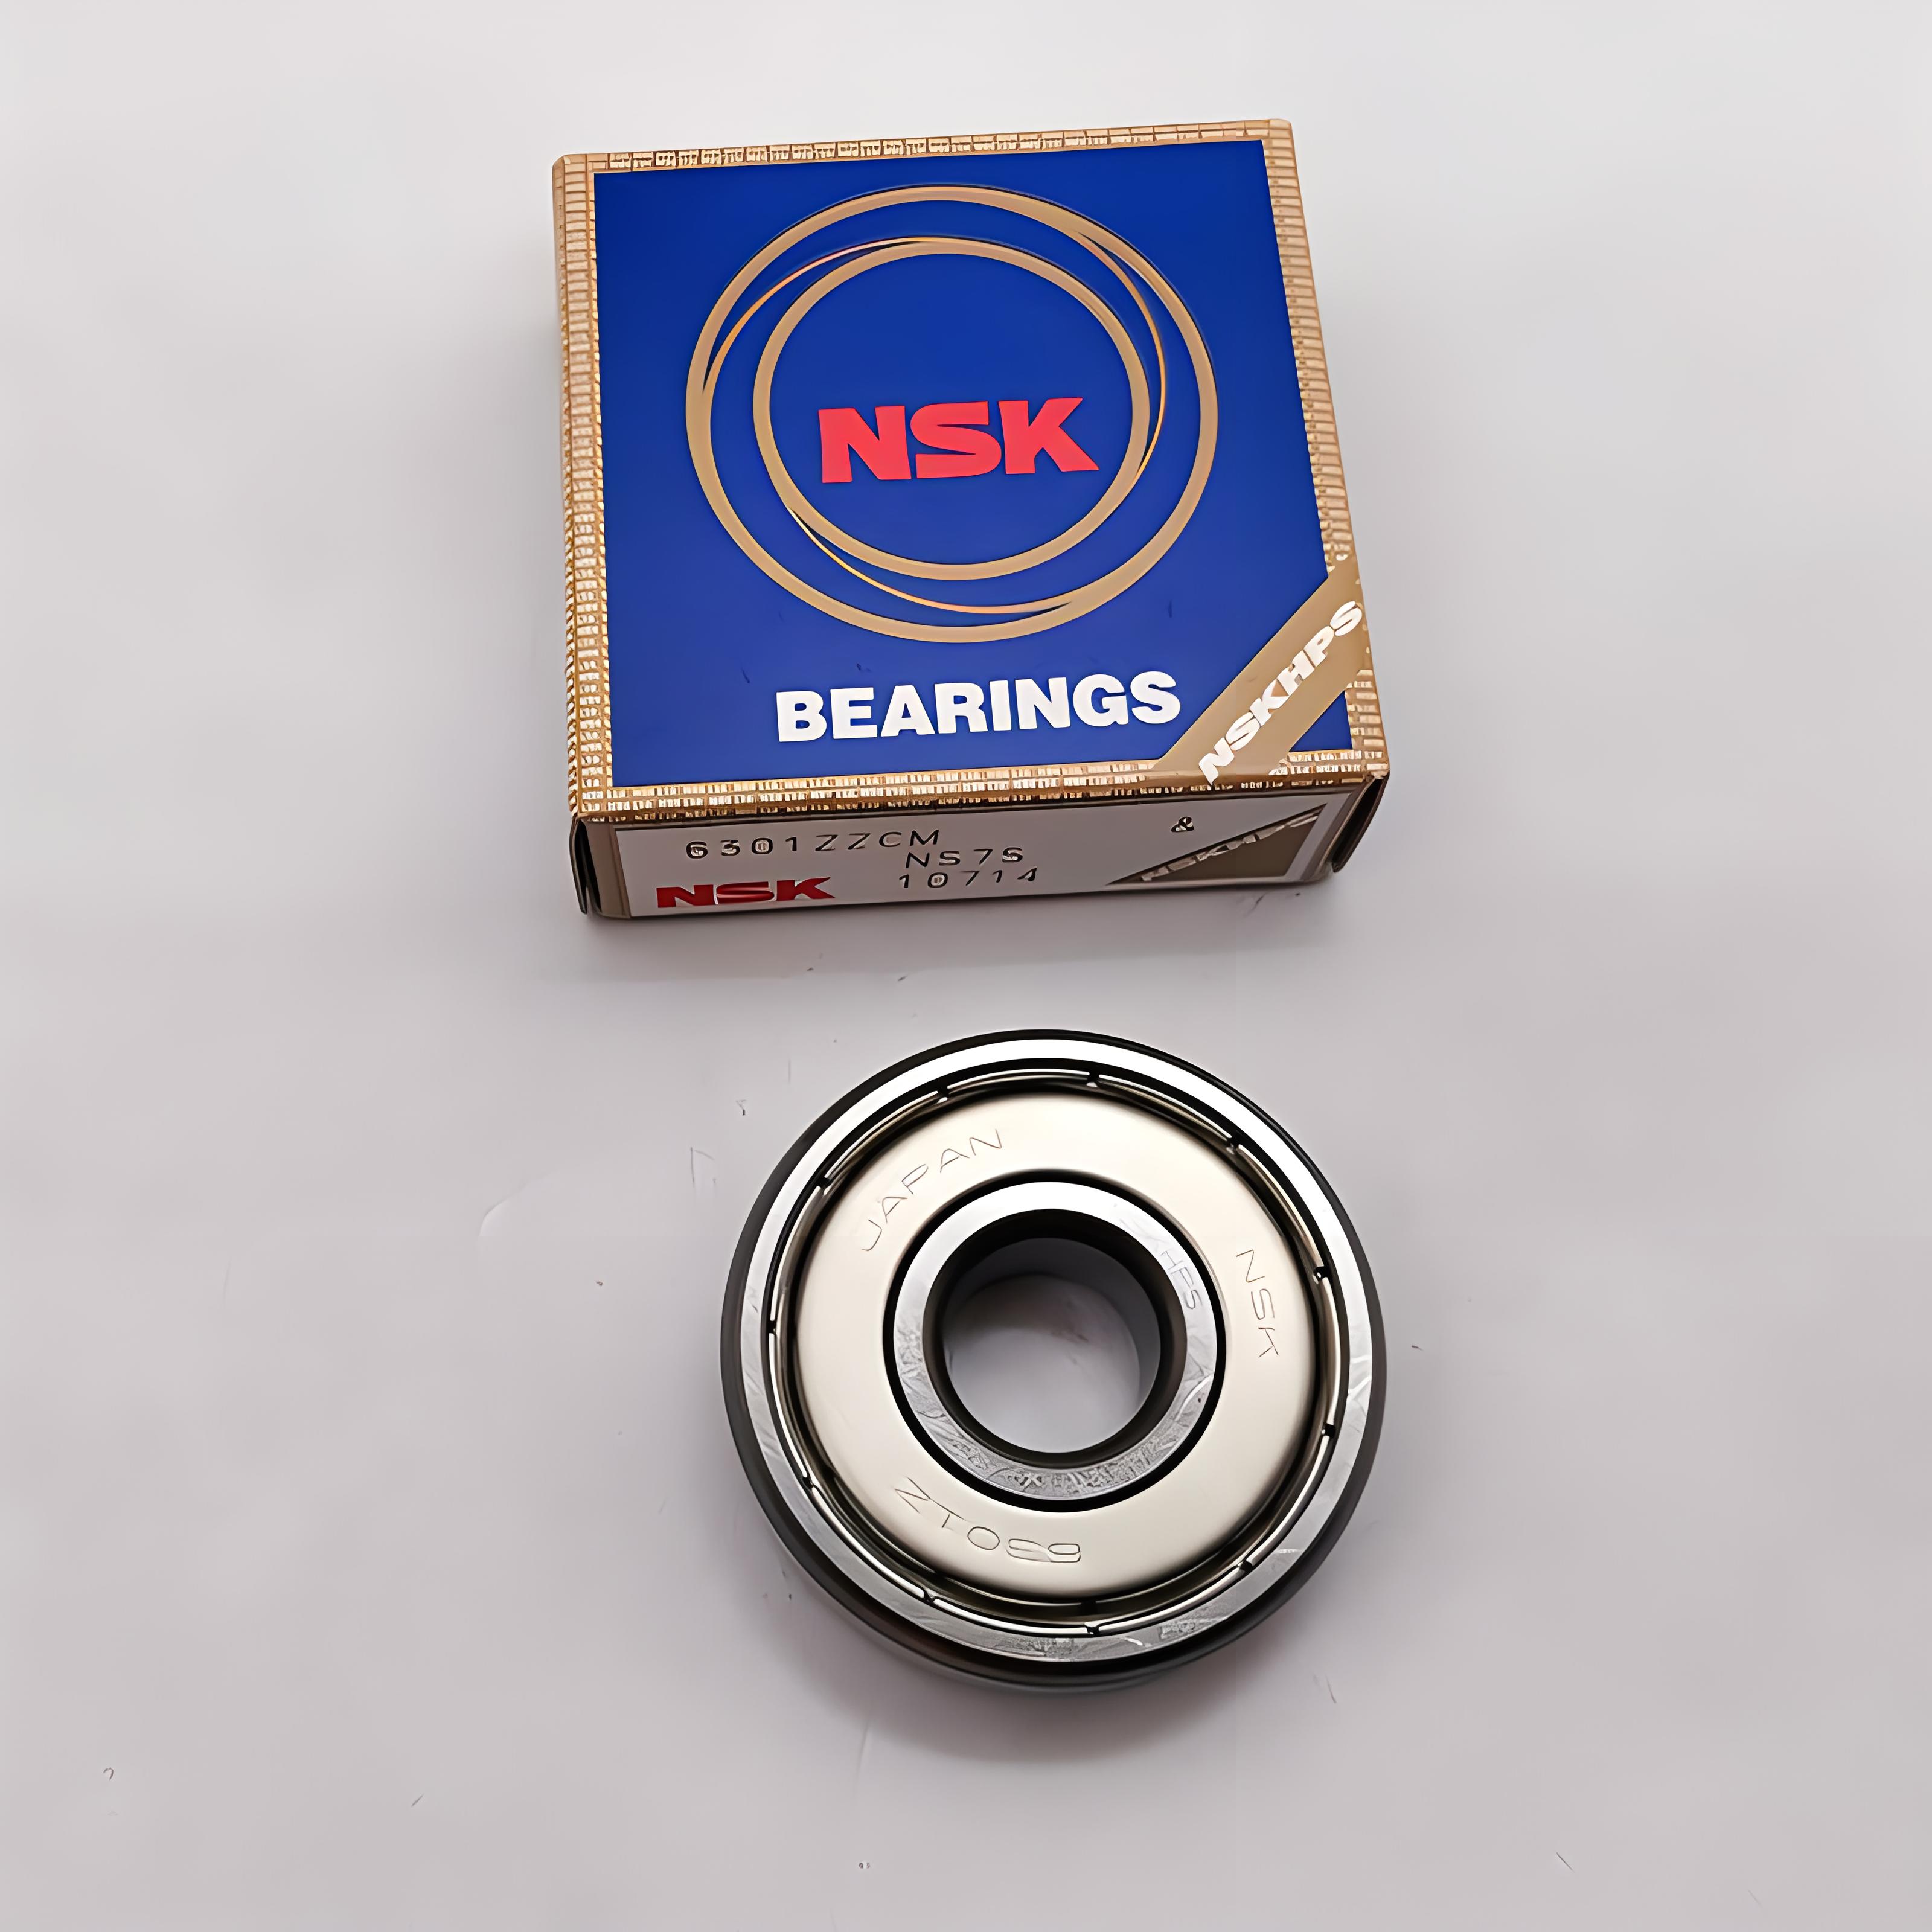 NSK进口轴承的质量标准有哪些？